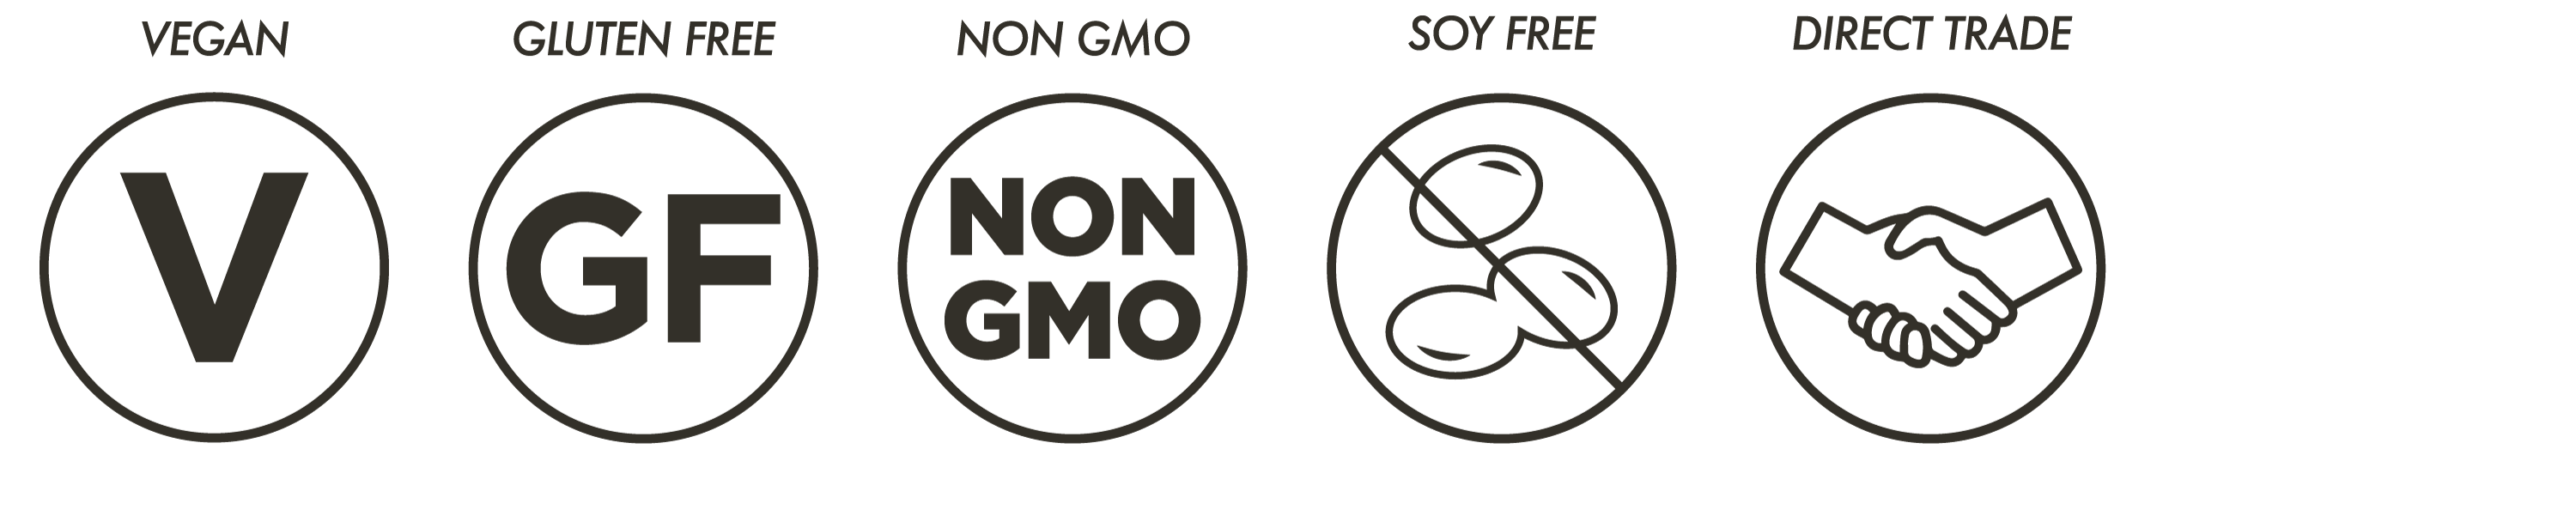 vegan, gluten-free, non-gmo, soy free, direct trade